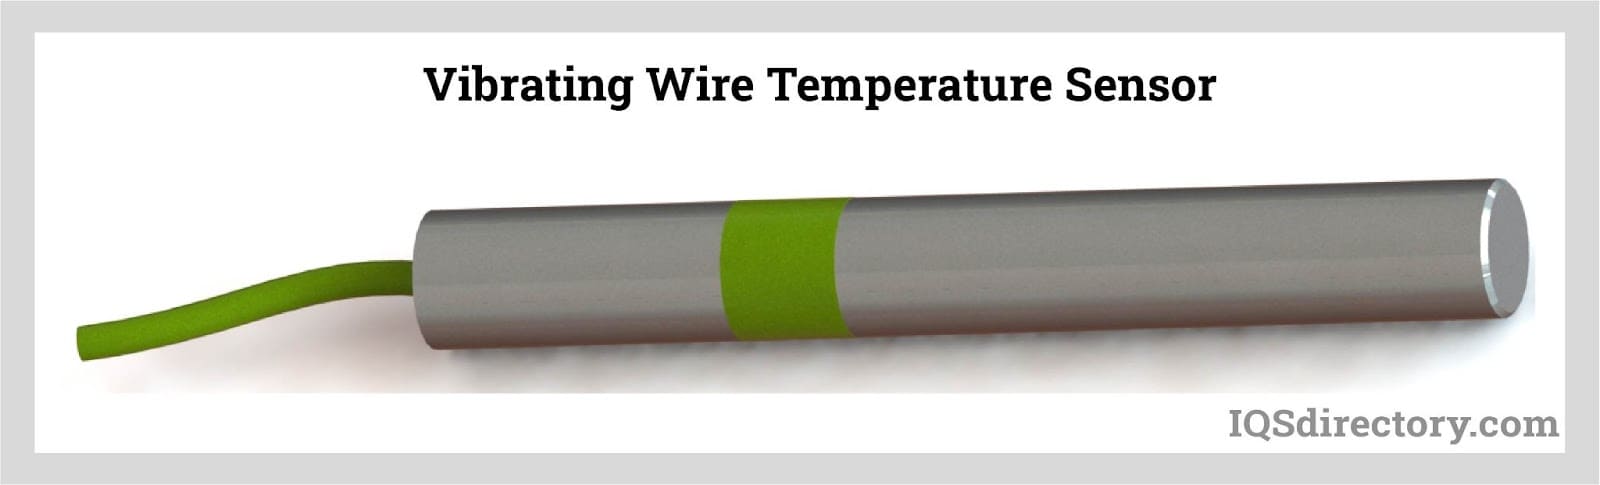 Vibrating Wire Temperature Sensor